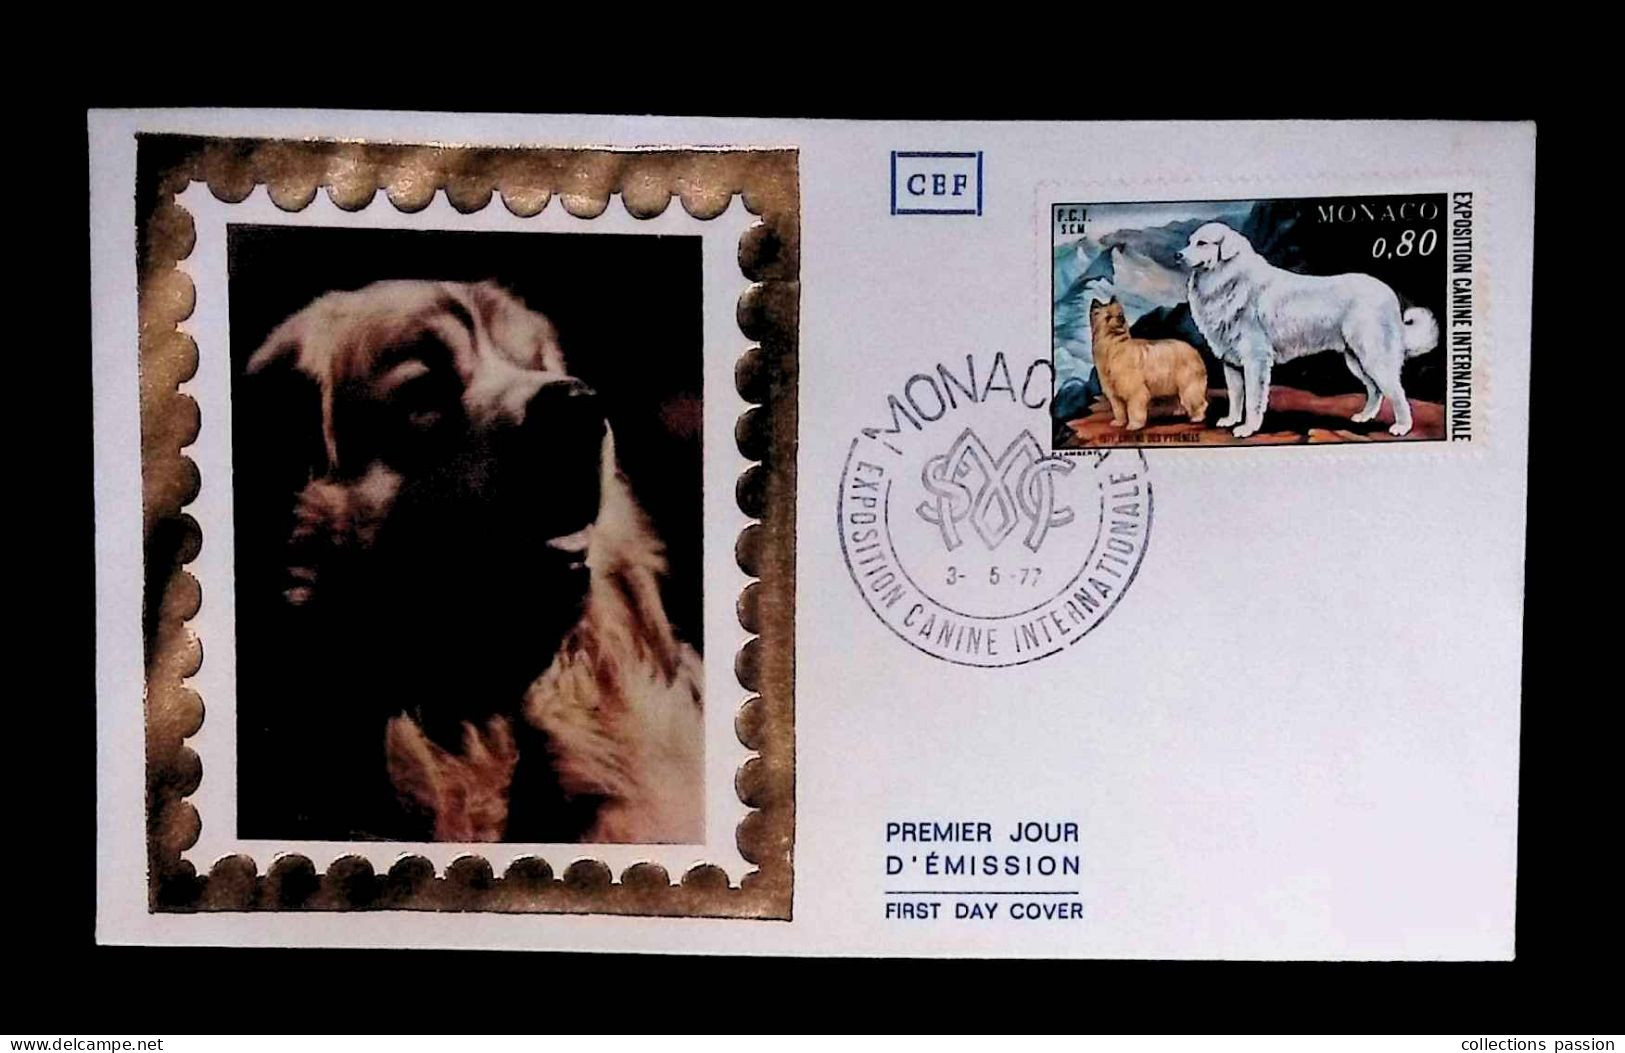 CL, FDC, 1 Er Jour, Monaco-A, 3-5 77, Exposition Canine Internationale, CEF - FDC